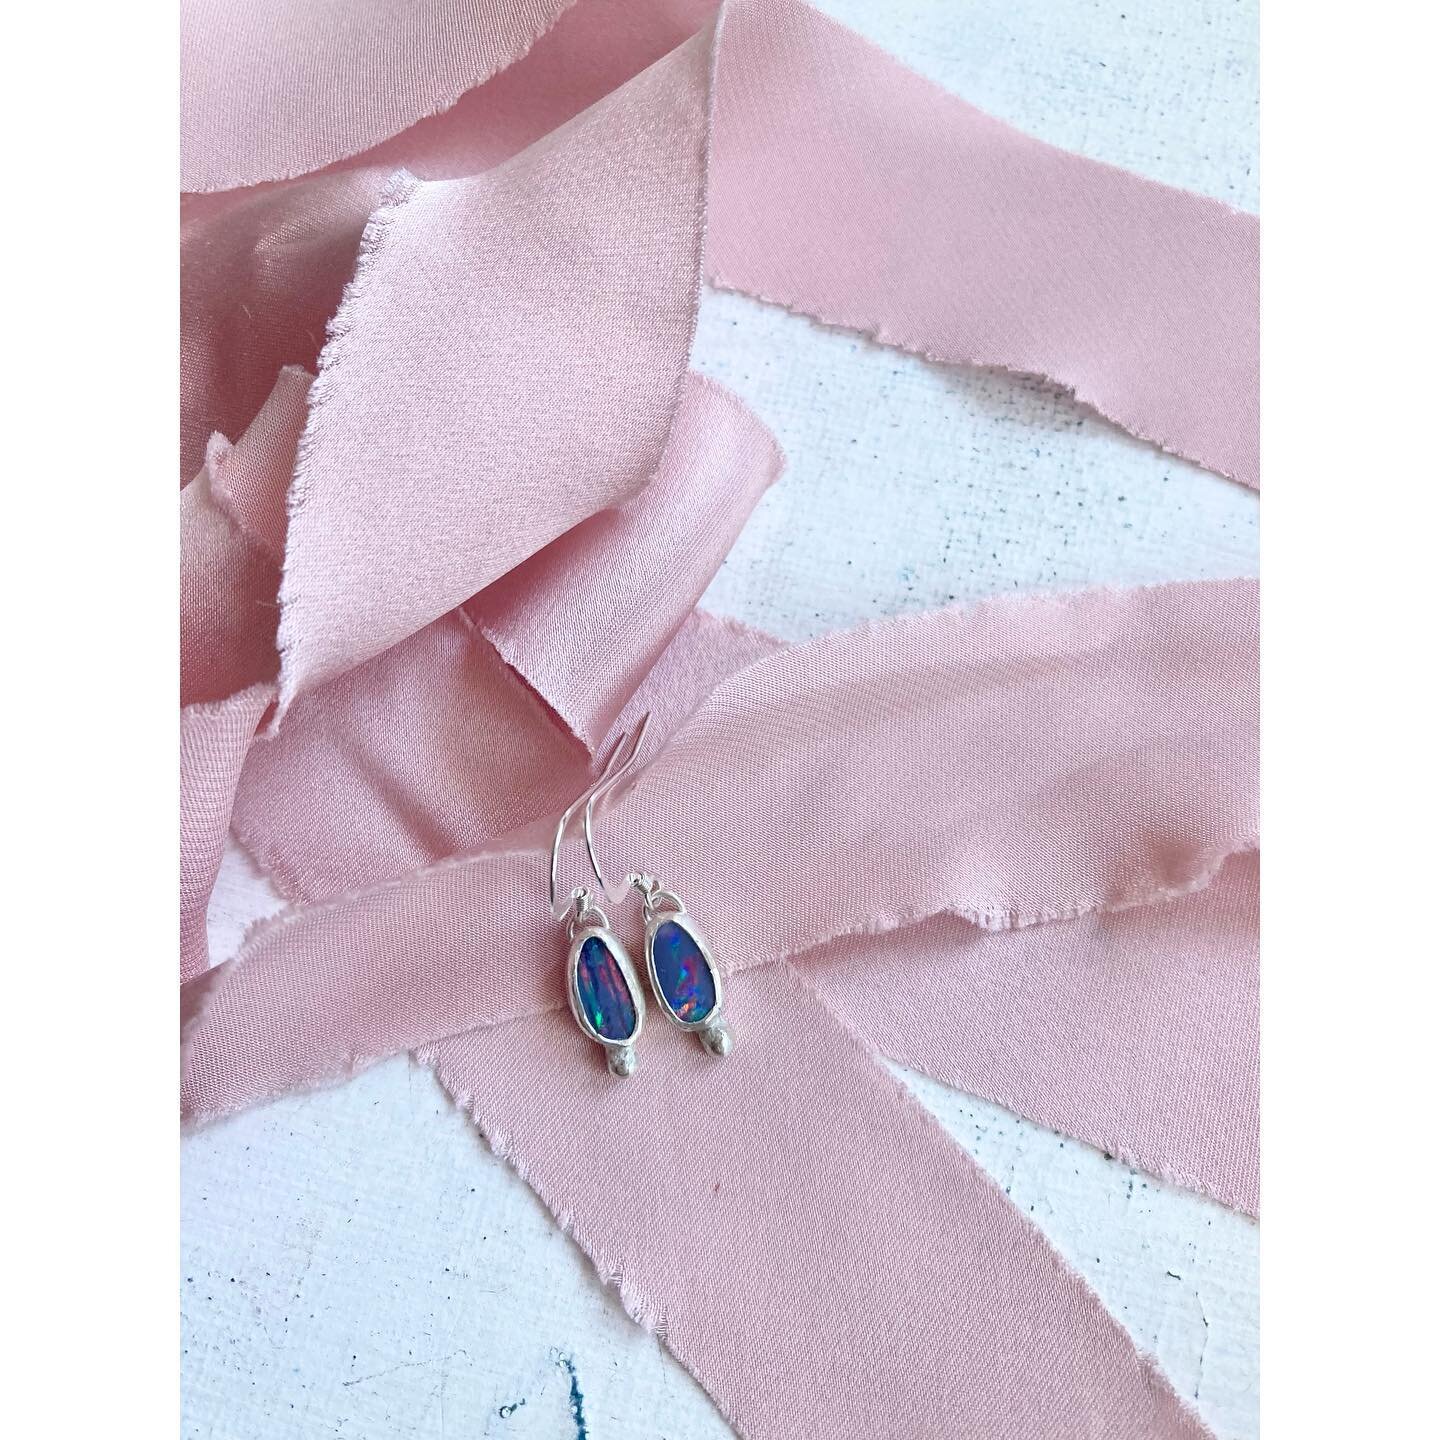 Custom Australian opal earrings. Small, cute, simple 💕